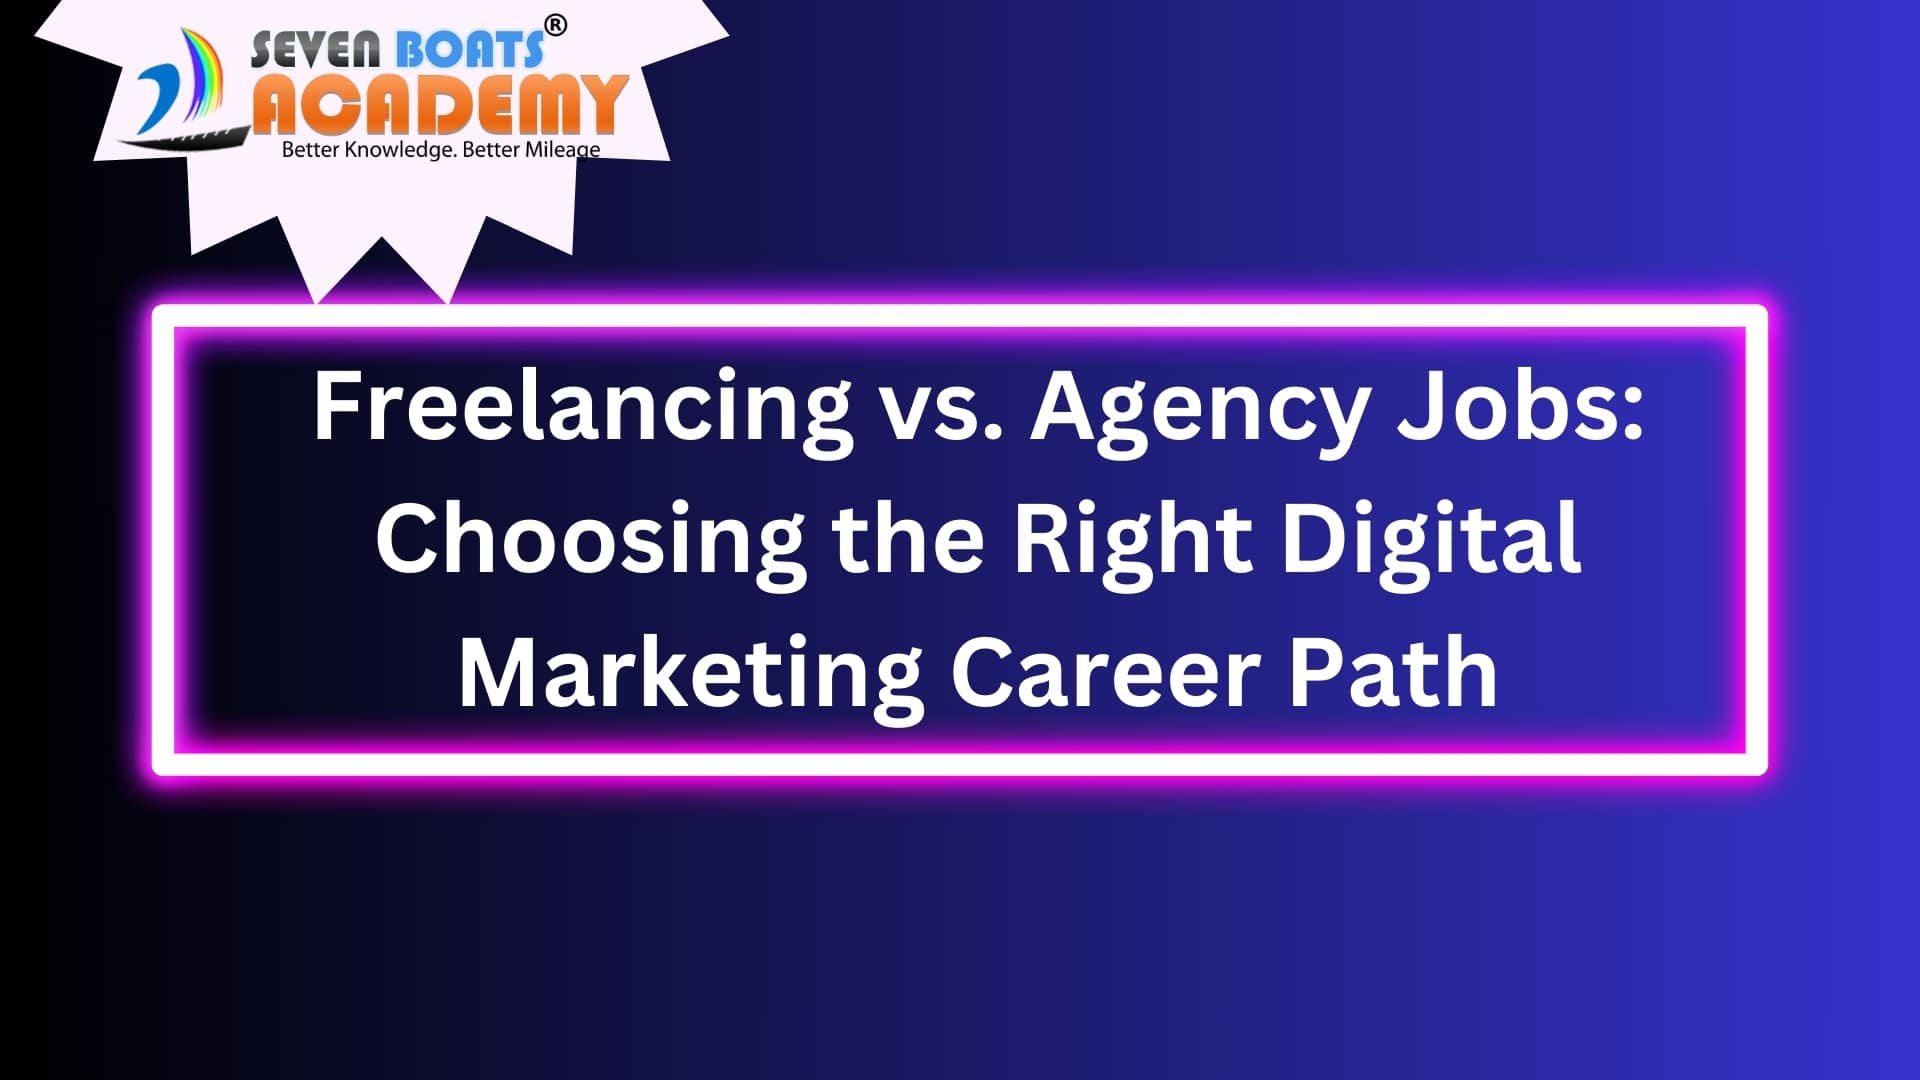 Freelancing vs. Agency Jobs - Choosing the Right Digital Marketing Career Path